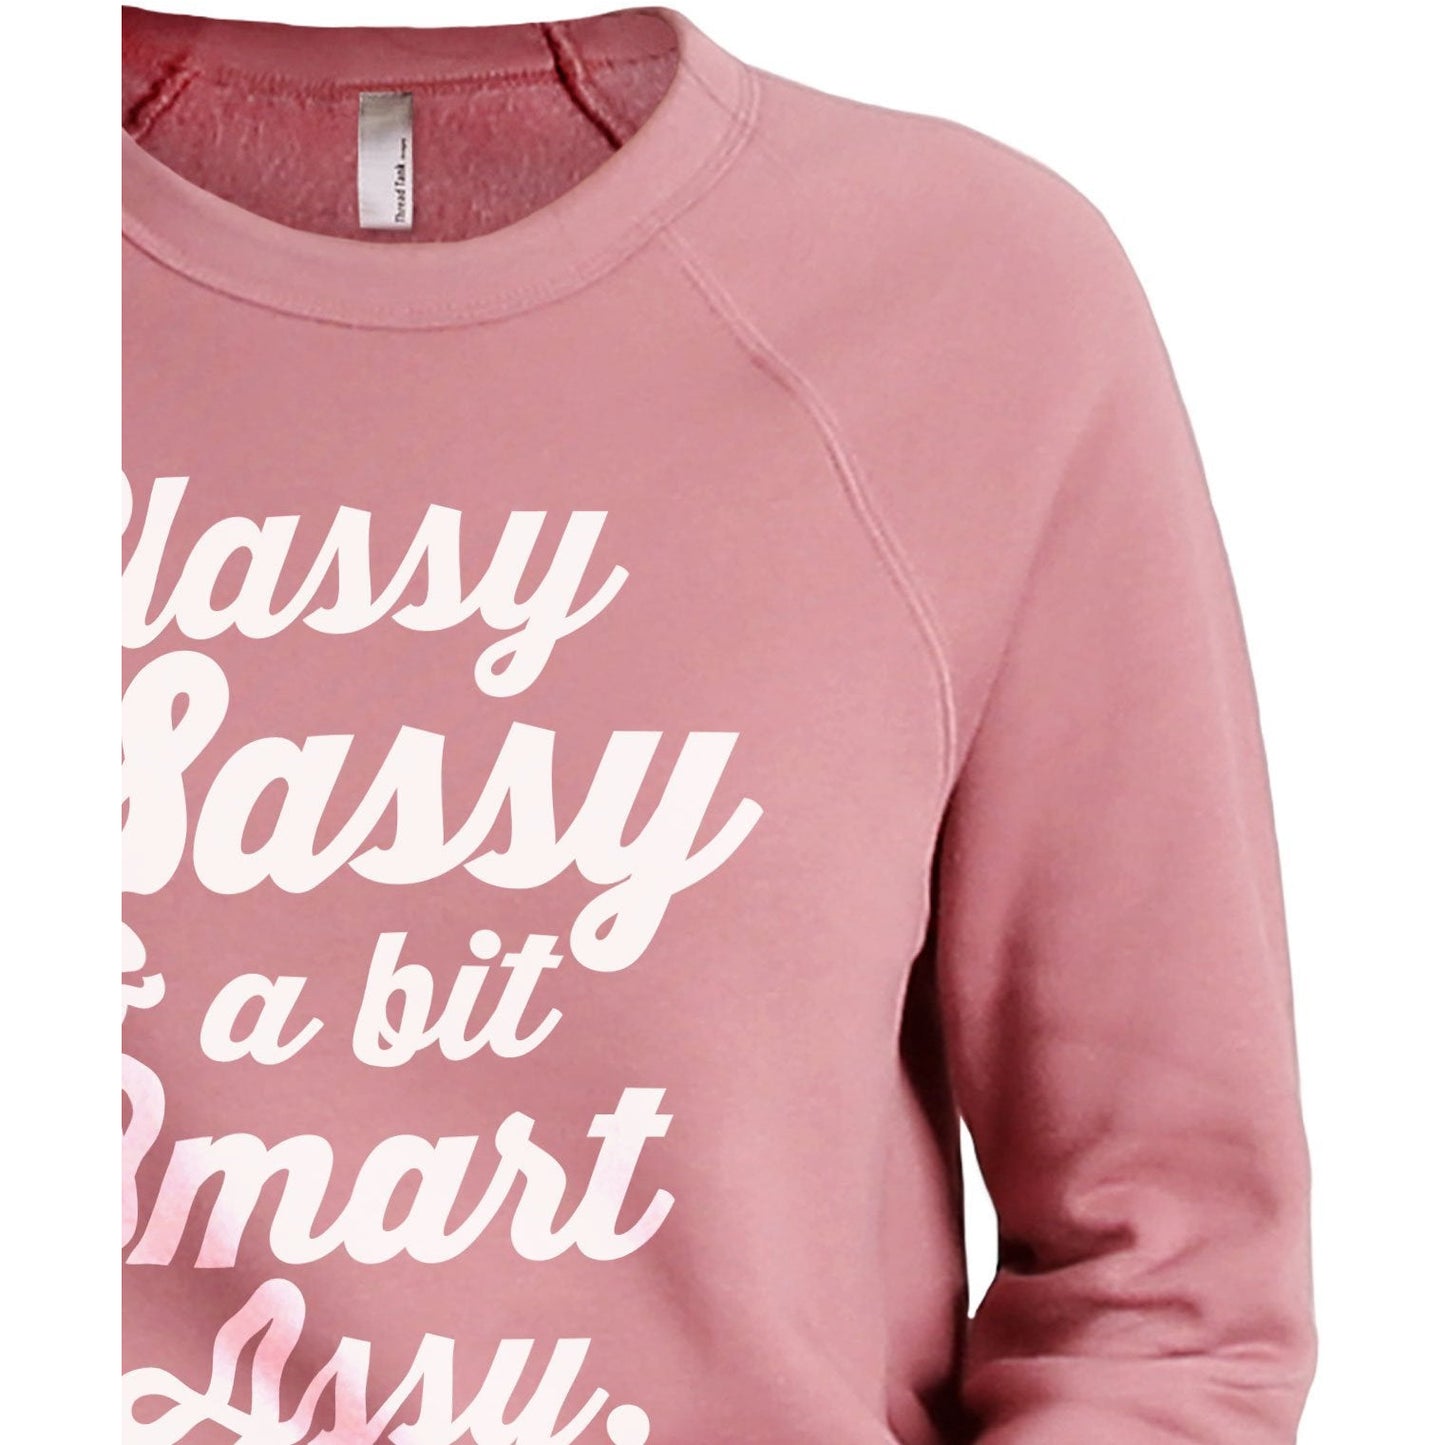 Classy Sassy and A Bit Smart Assy Women's Cozy Fleece Longsleeves Sweater Rouge Closeup Details